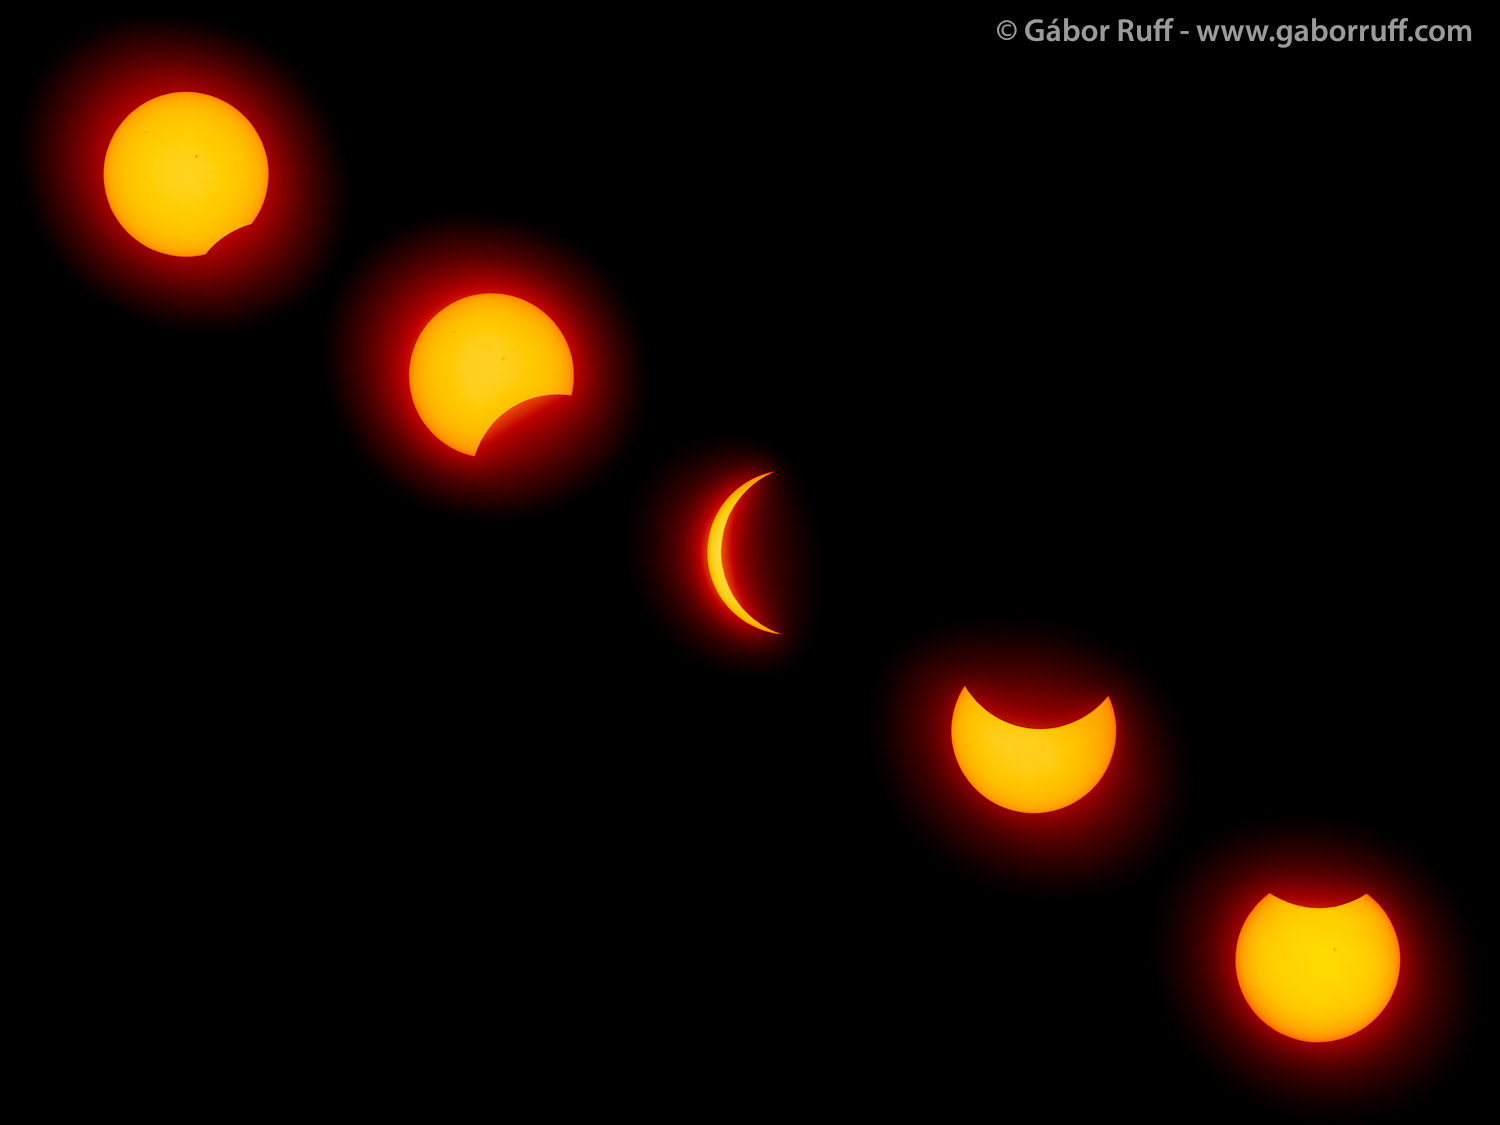 GRR_240408_composite-solar-eclipse.jpg